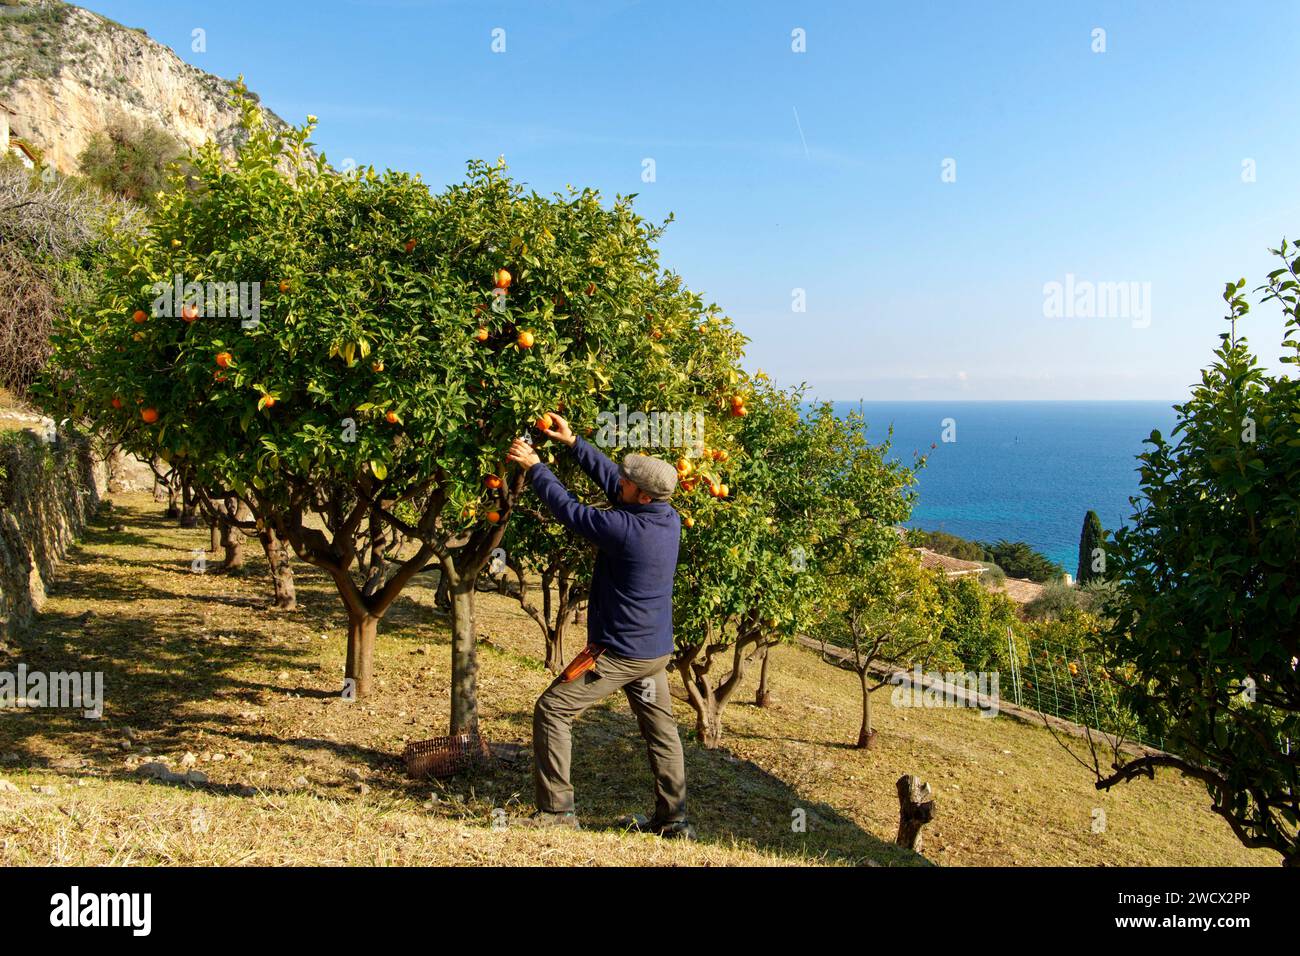 France, Alpes Maritimes, Cote d'Azur, Menton, on the heights of Garavan, is the Casetta, the municipal nursery dedicated to citrus fruits, organic lemon trees (Menton lemons IGP) Stock Photo